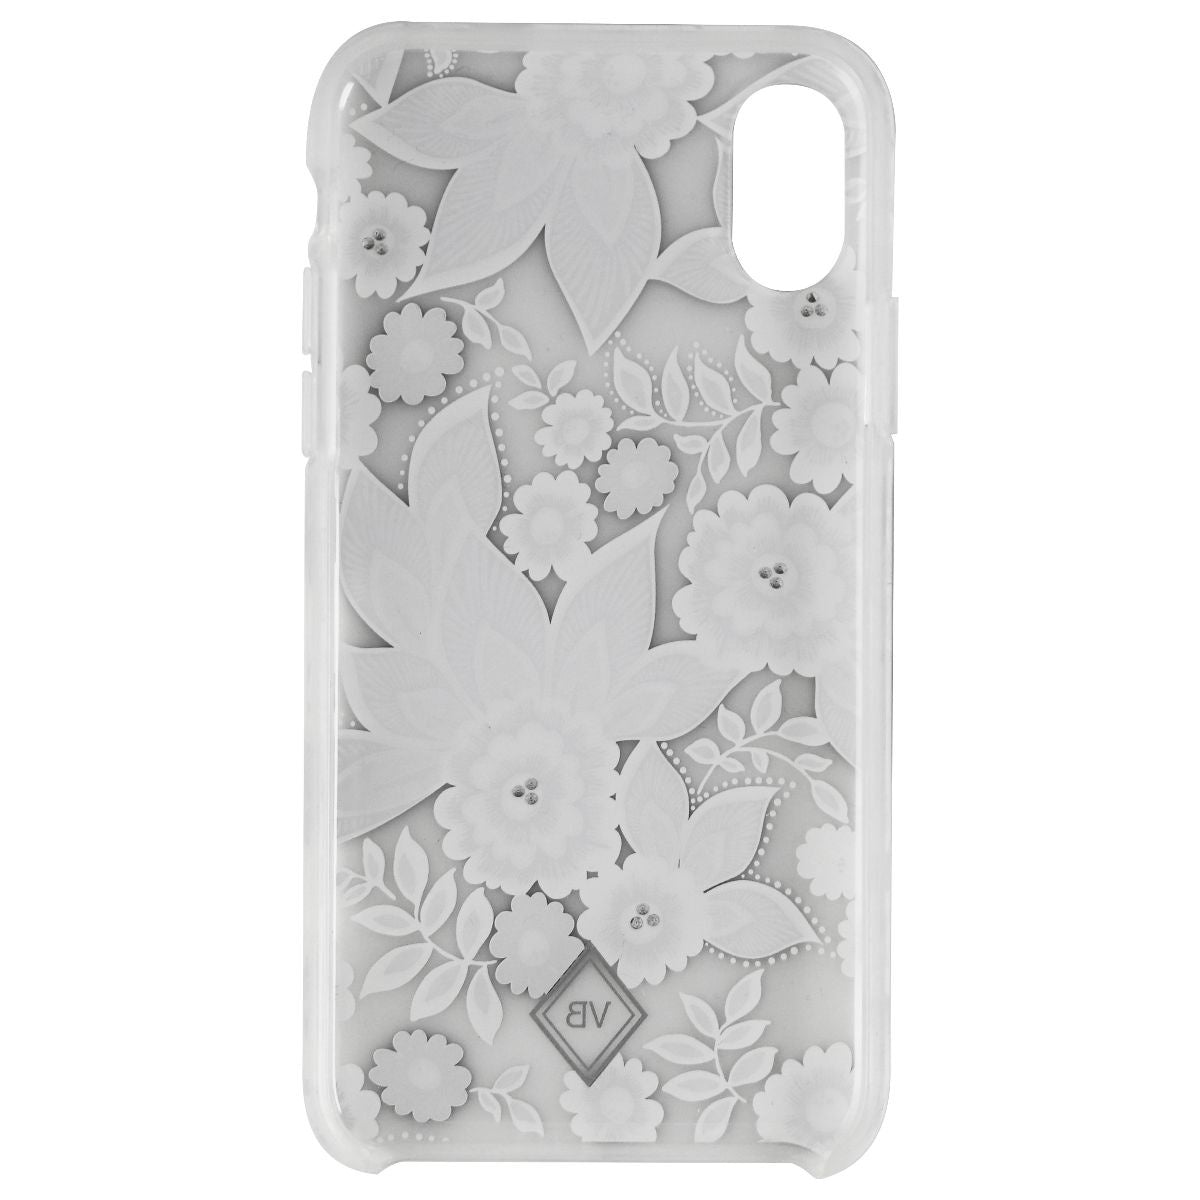 Vera Bradley Flexible Frame Case Apple iPhone X - White / Black Lotus Flowers Cell Phone - Cases, Covers & Skins Vera Bradley    - Simple Cell Bulk Wholesale Pricing - USA Seller